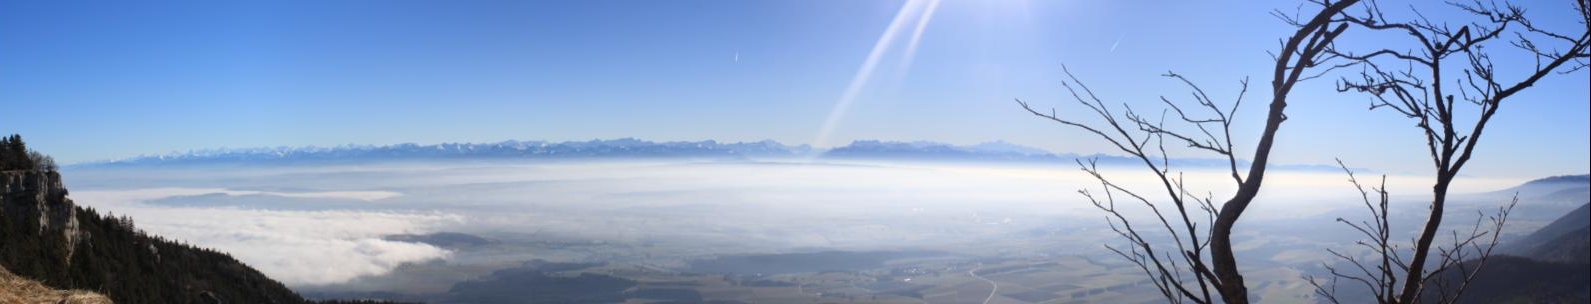  Panorama paysage alpes